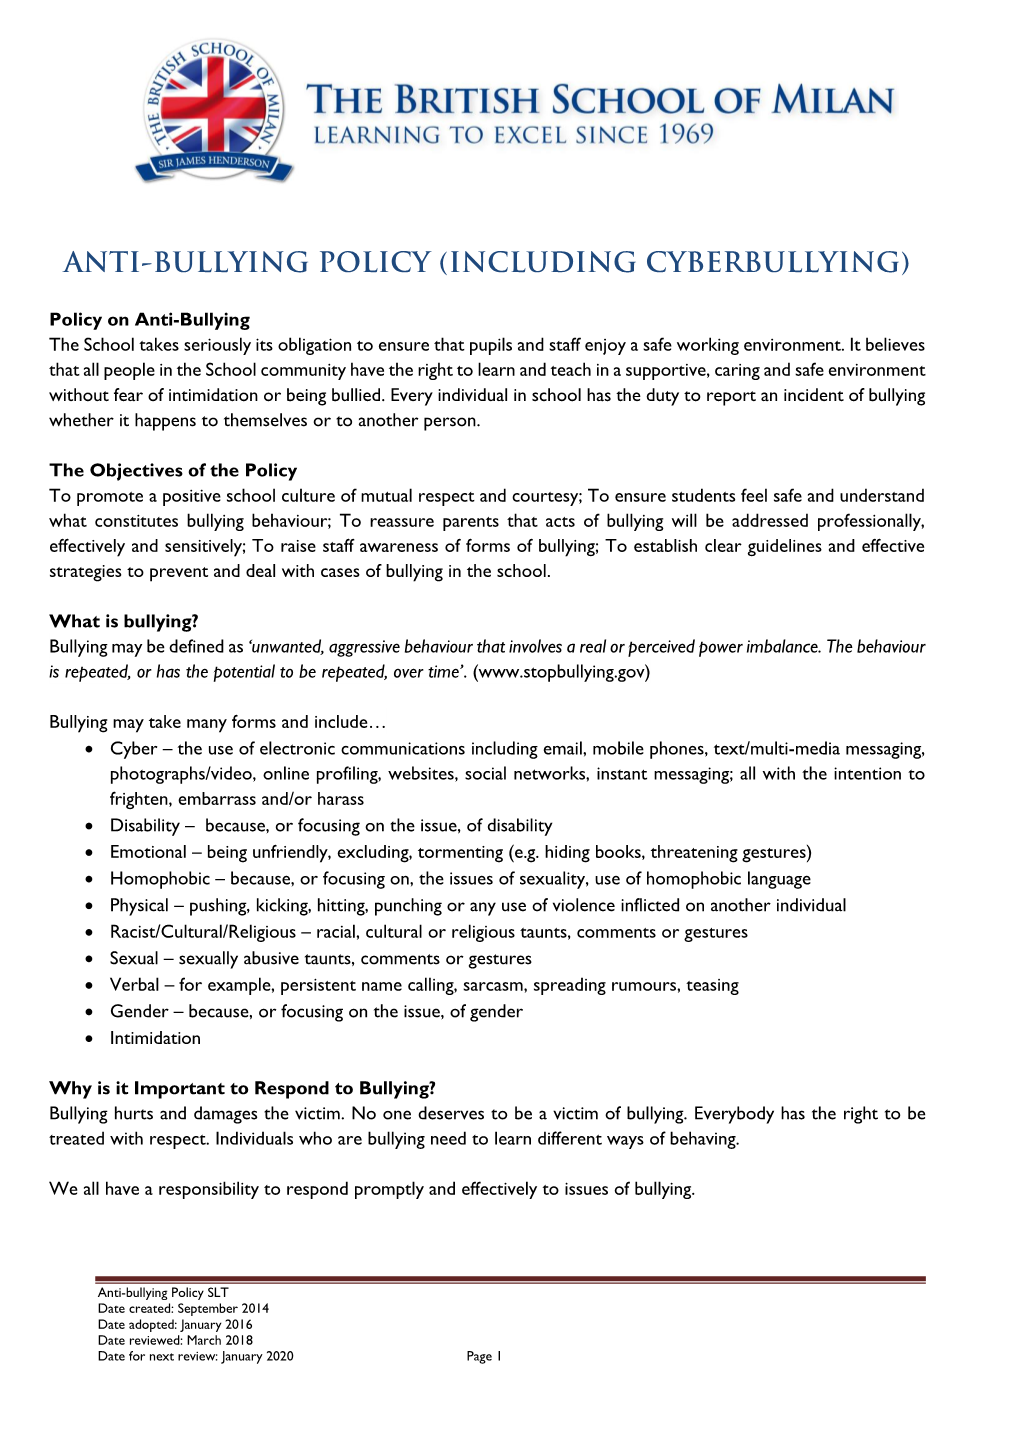 Anti-Bullying Policy (Including Cyberbullying)